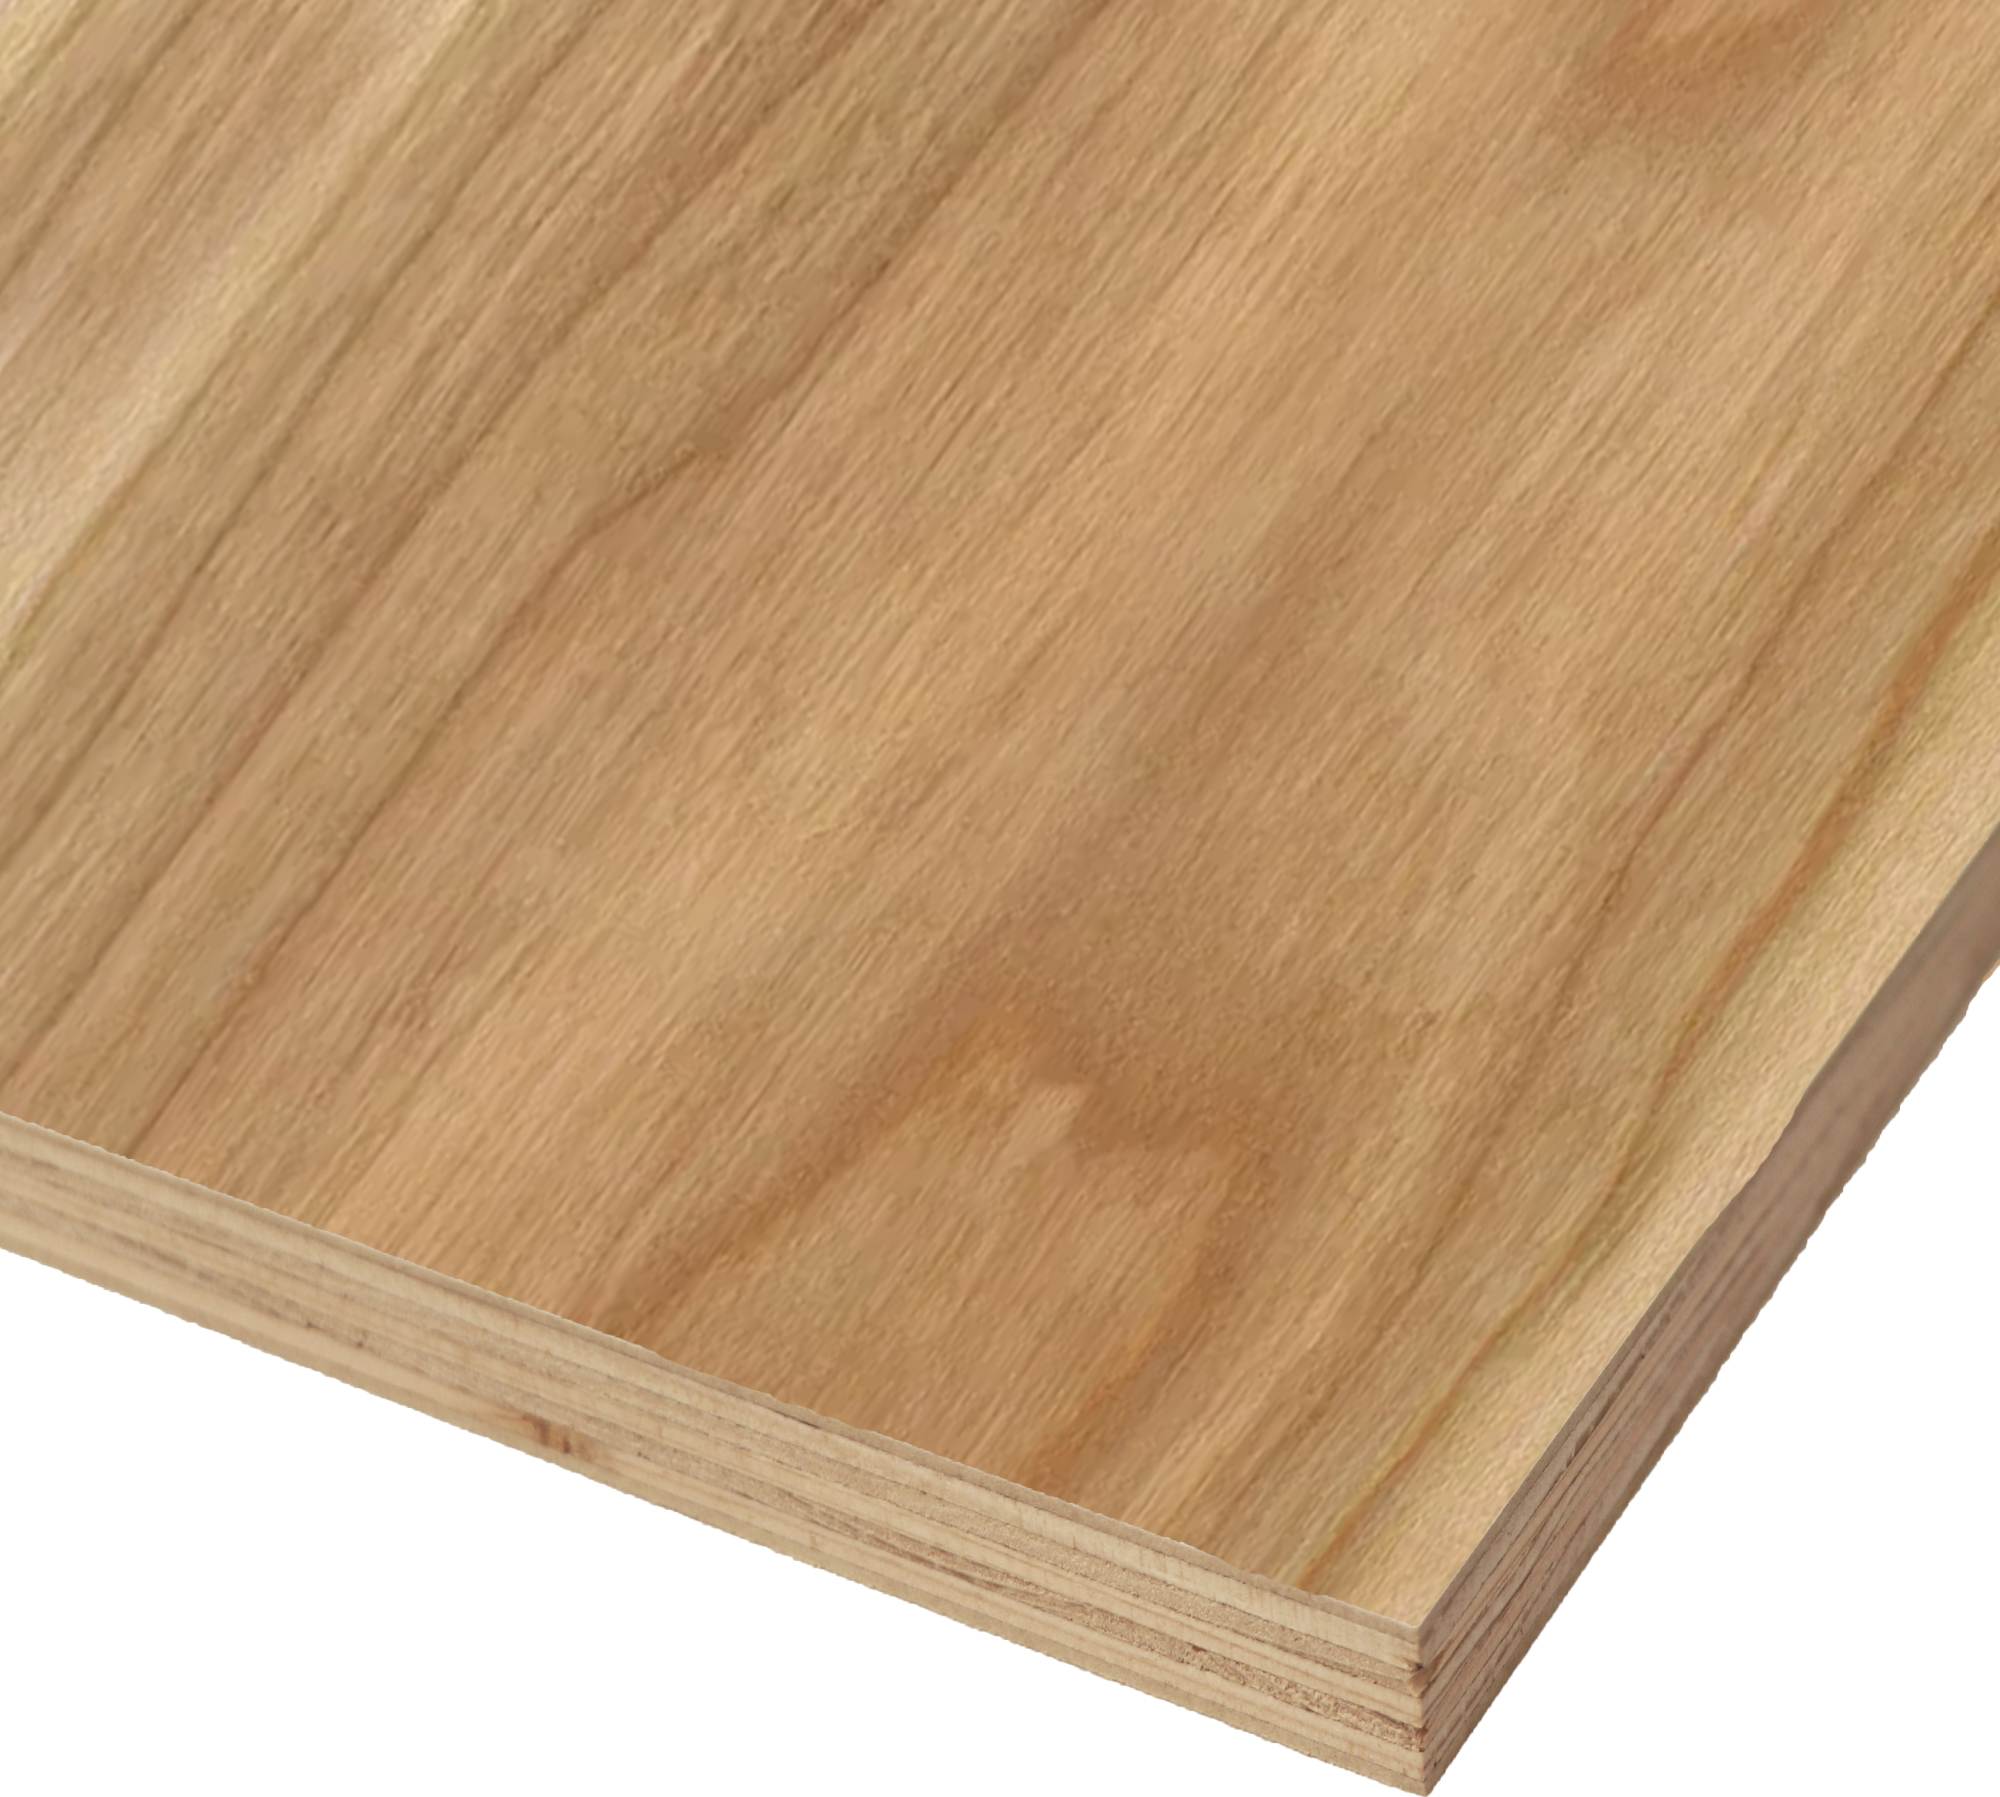 Cherry Plywood, Lumber